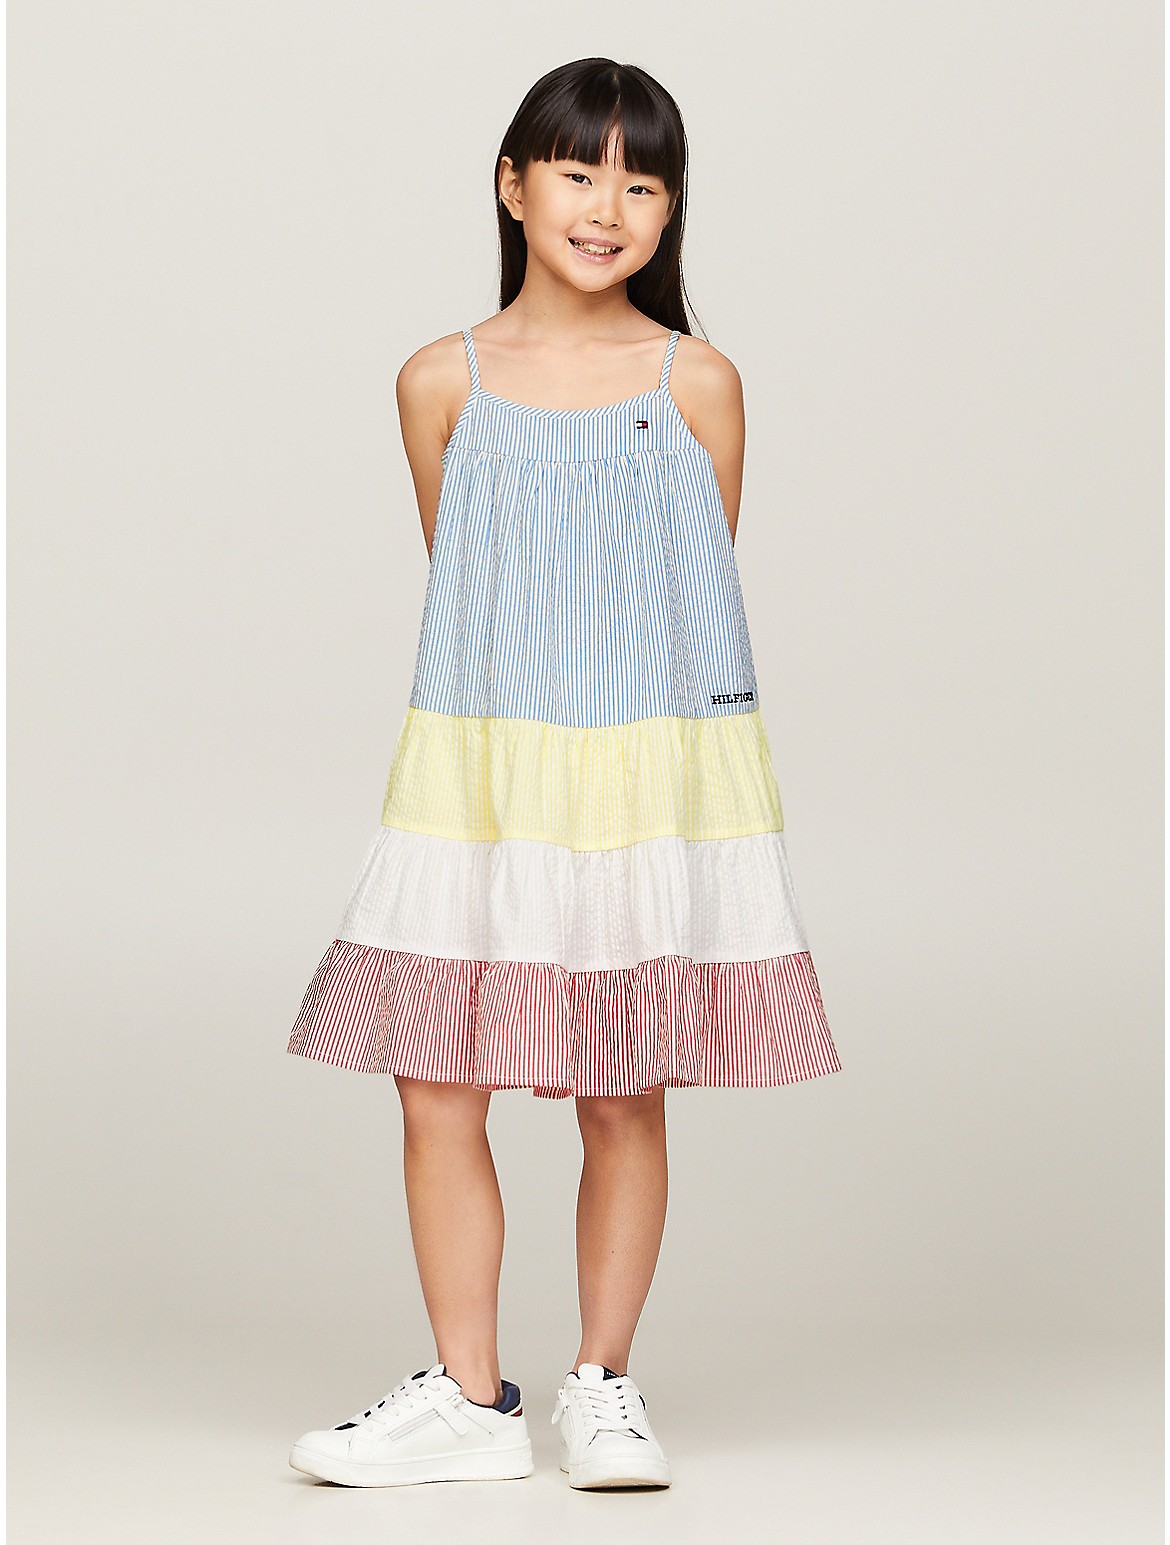 Tommy Hilfiger Girls' Kids' Mixed Stripe Seersucker Dress